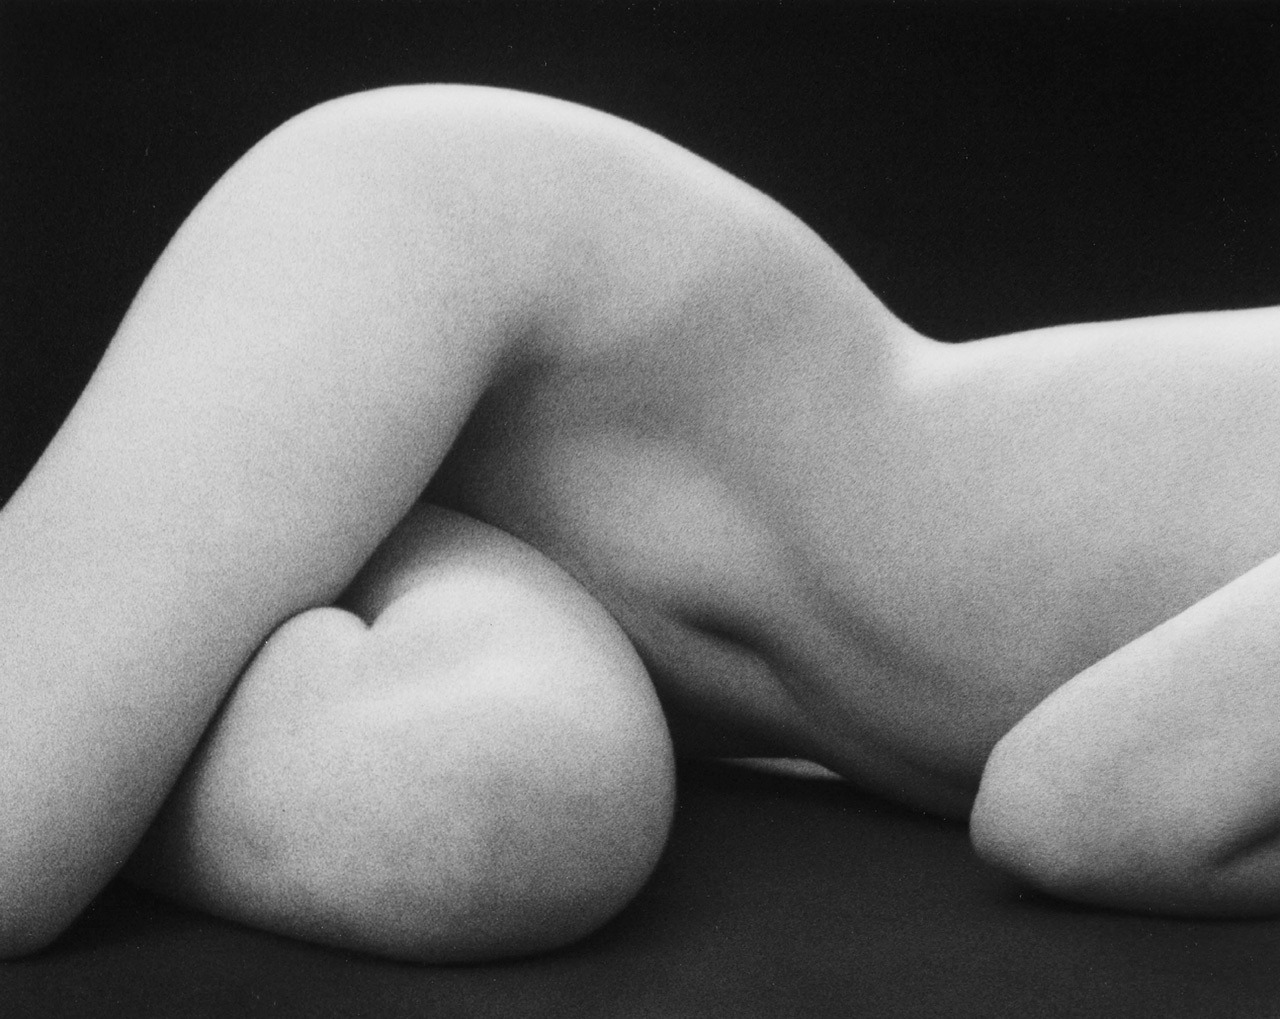 Hips Horizontal
photo by Ruth Bernhard, 1975